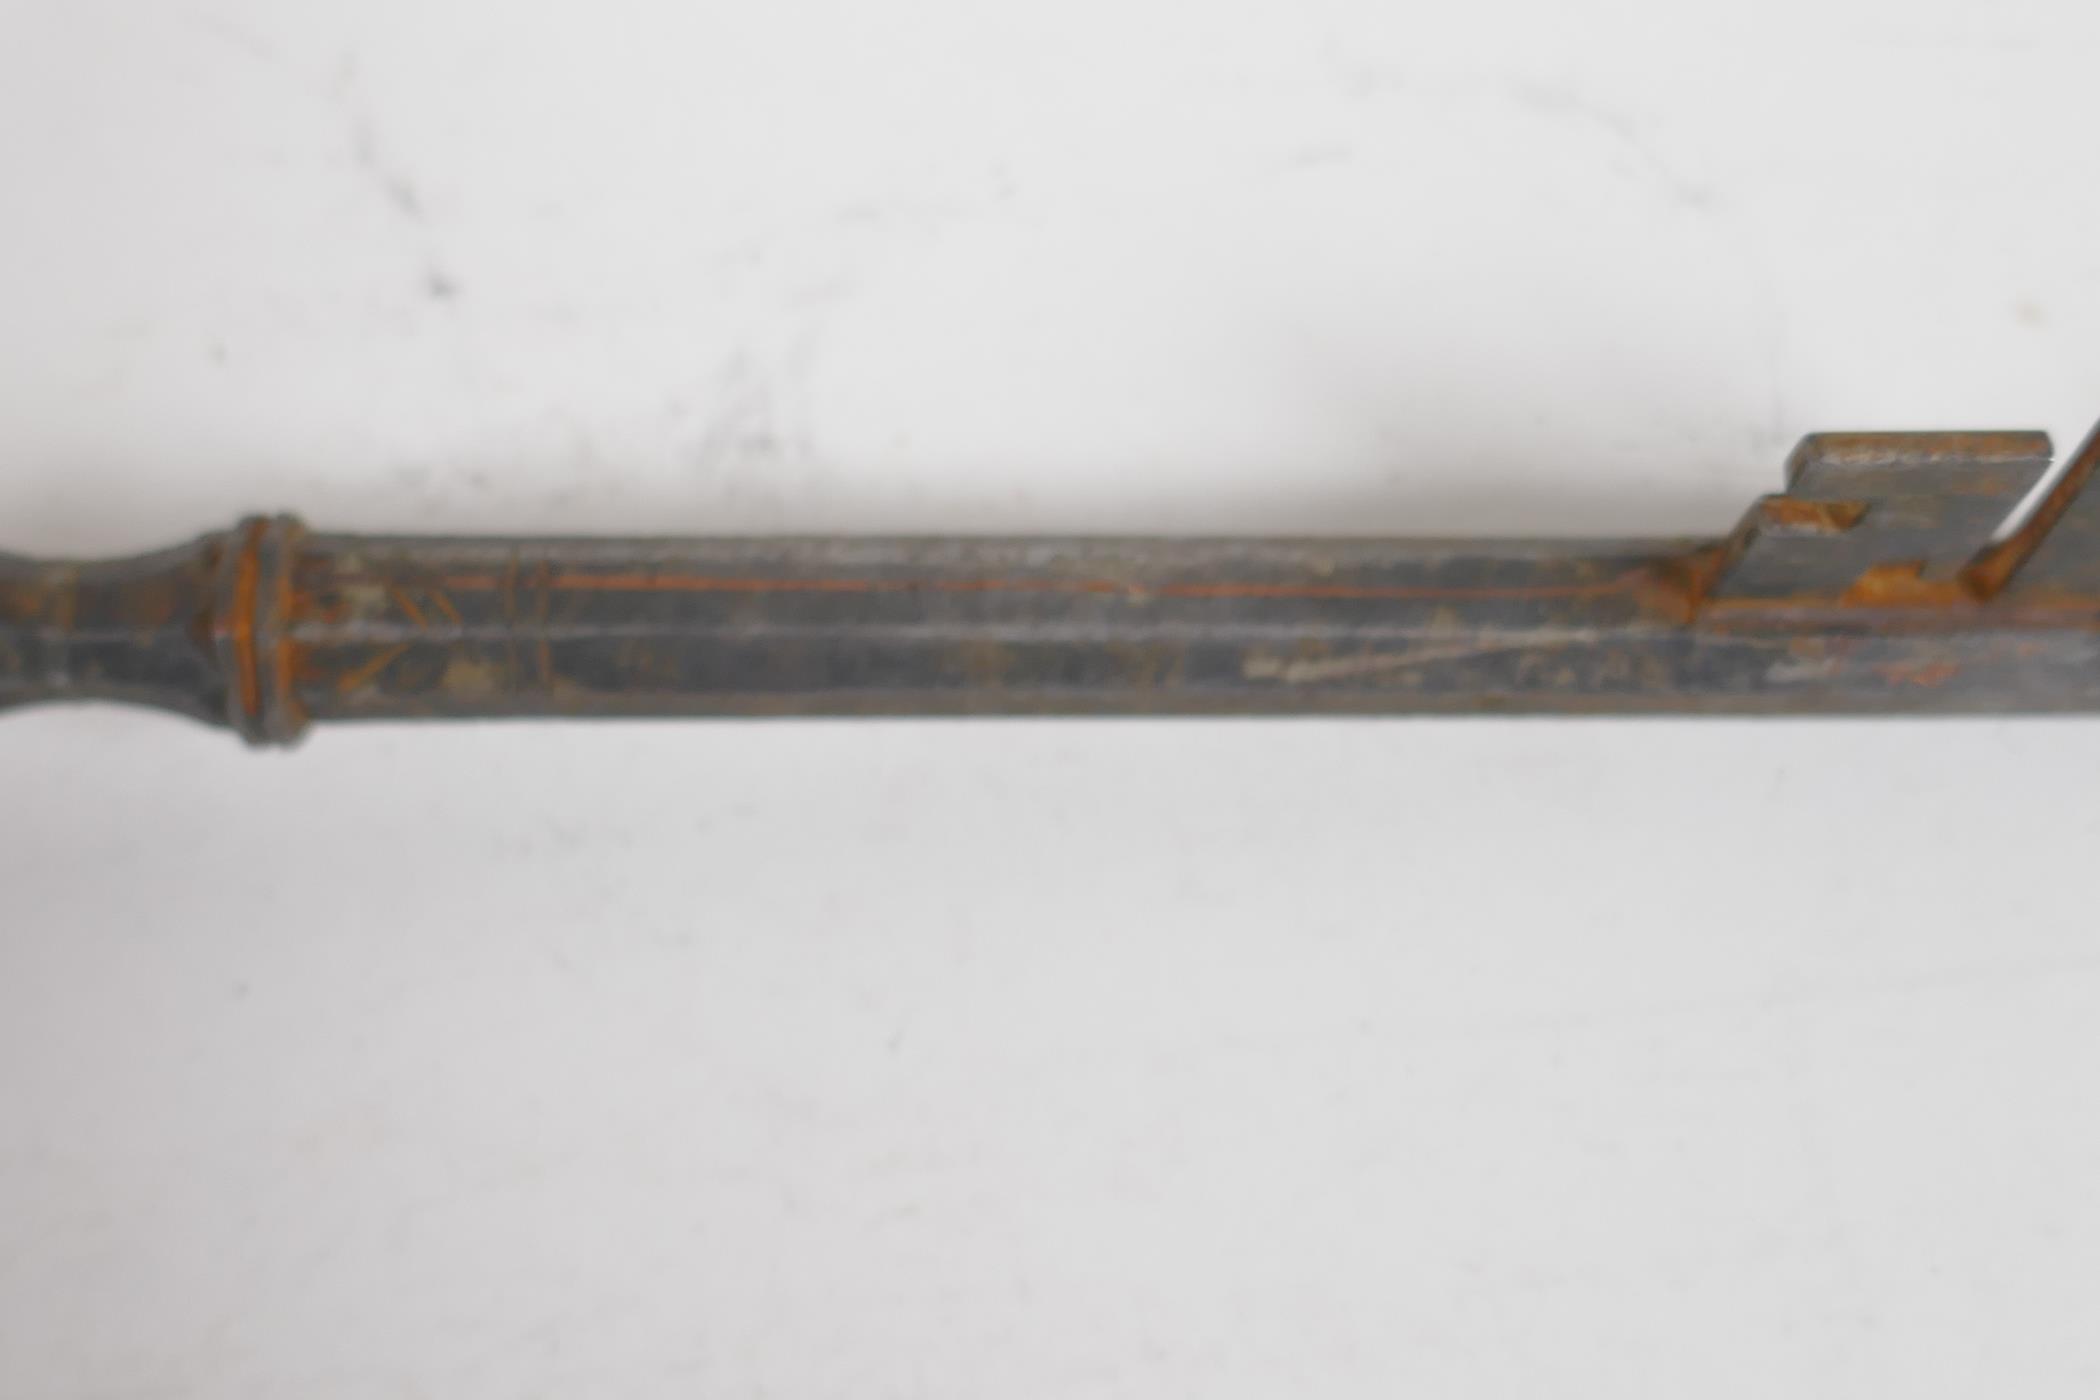 An antique Persian metal key made from a gun barrel, 9" long - Image 4 of 4